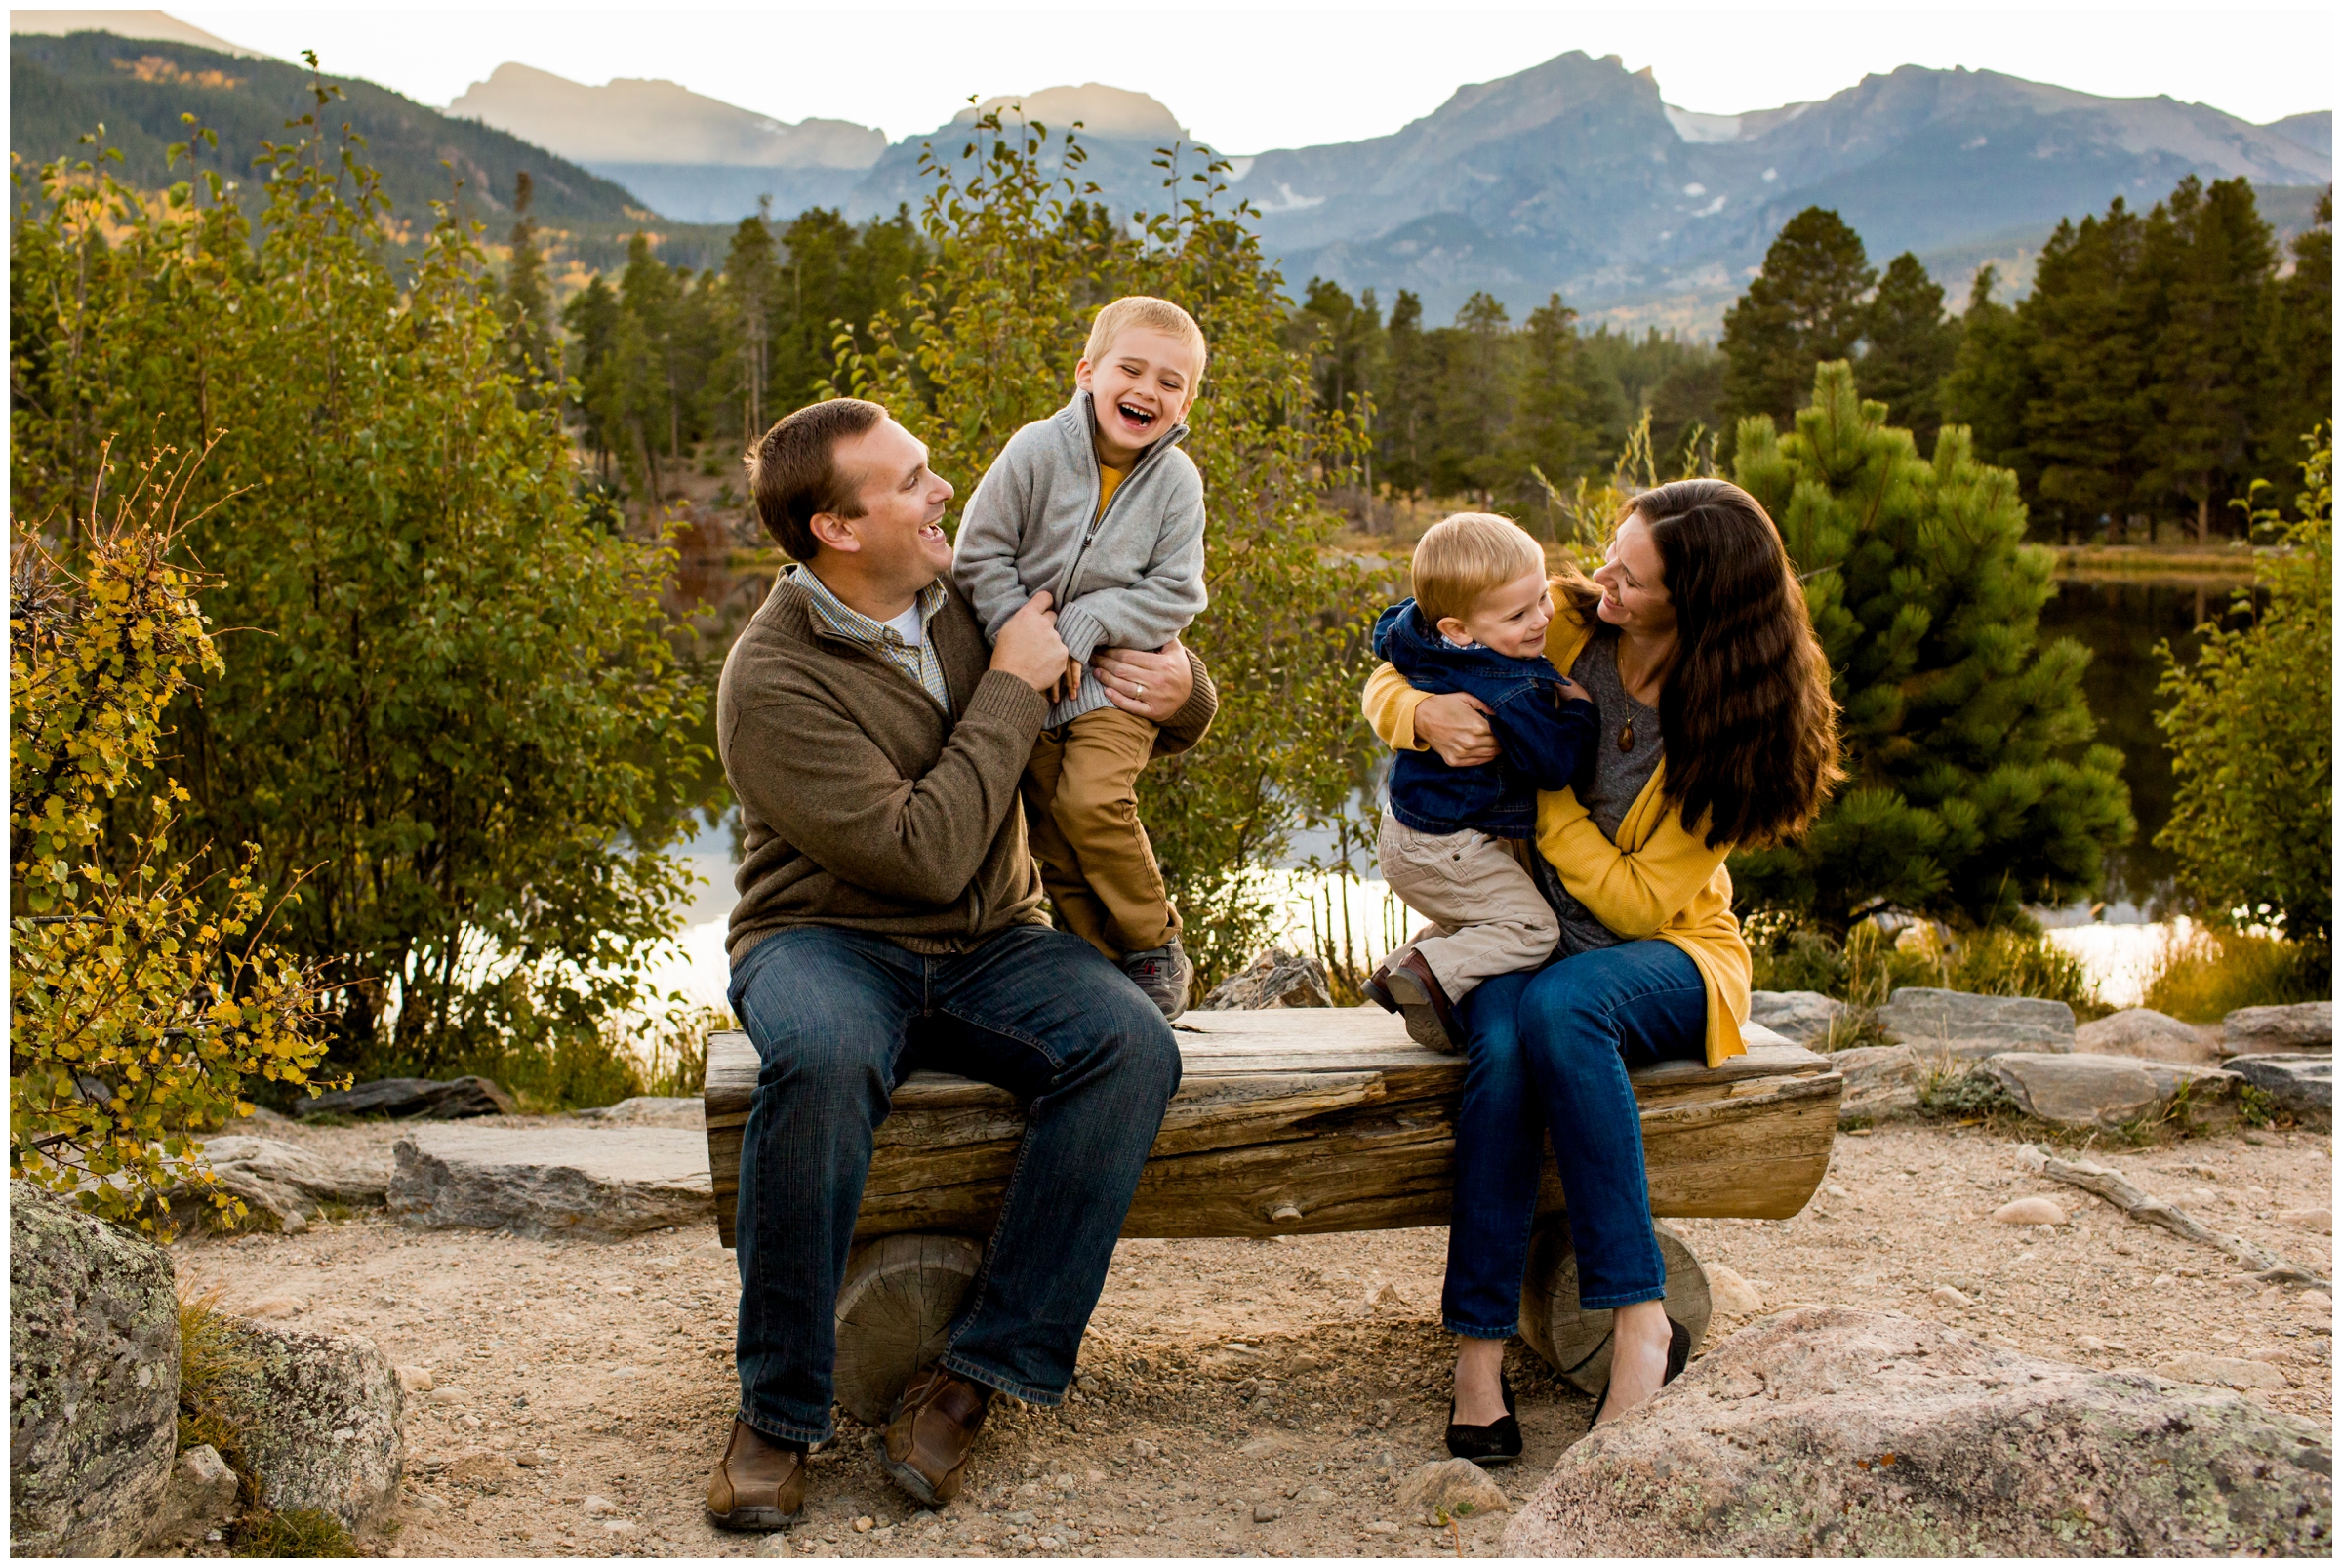 Estes Park family photography at Sprague Lake in Rocky Mountain National Park by Colorado portrait photographer Plum Pretty Photography